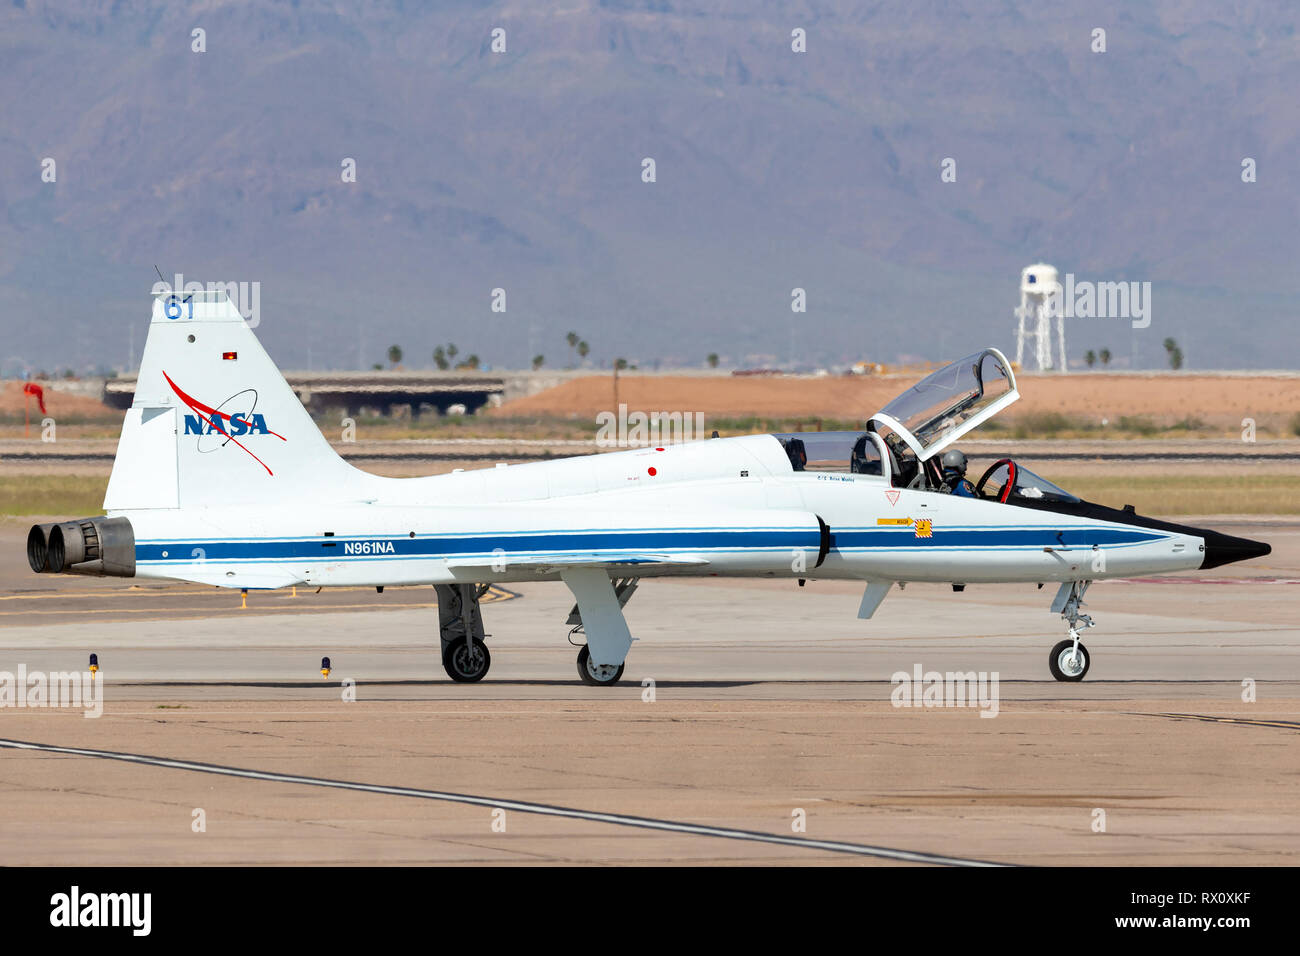 NASA (National Aeronautics and Space Administration) Northrop T-38 Talon jet aircraft N961NA at Phoenix-Mesa Gateway airport in Arizona. Stock Photo